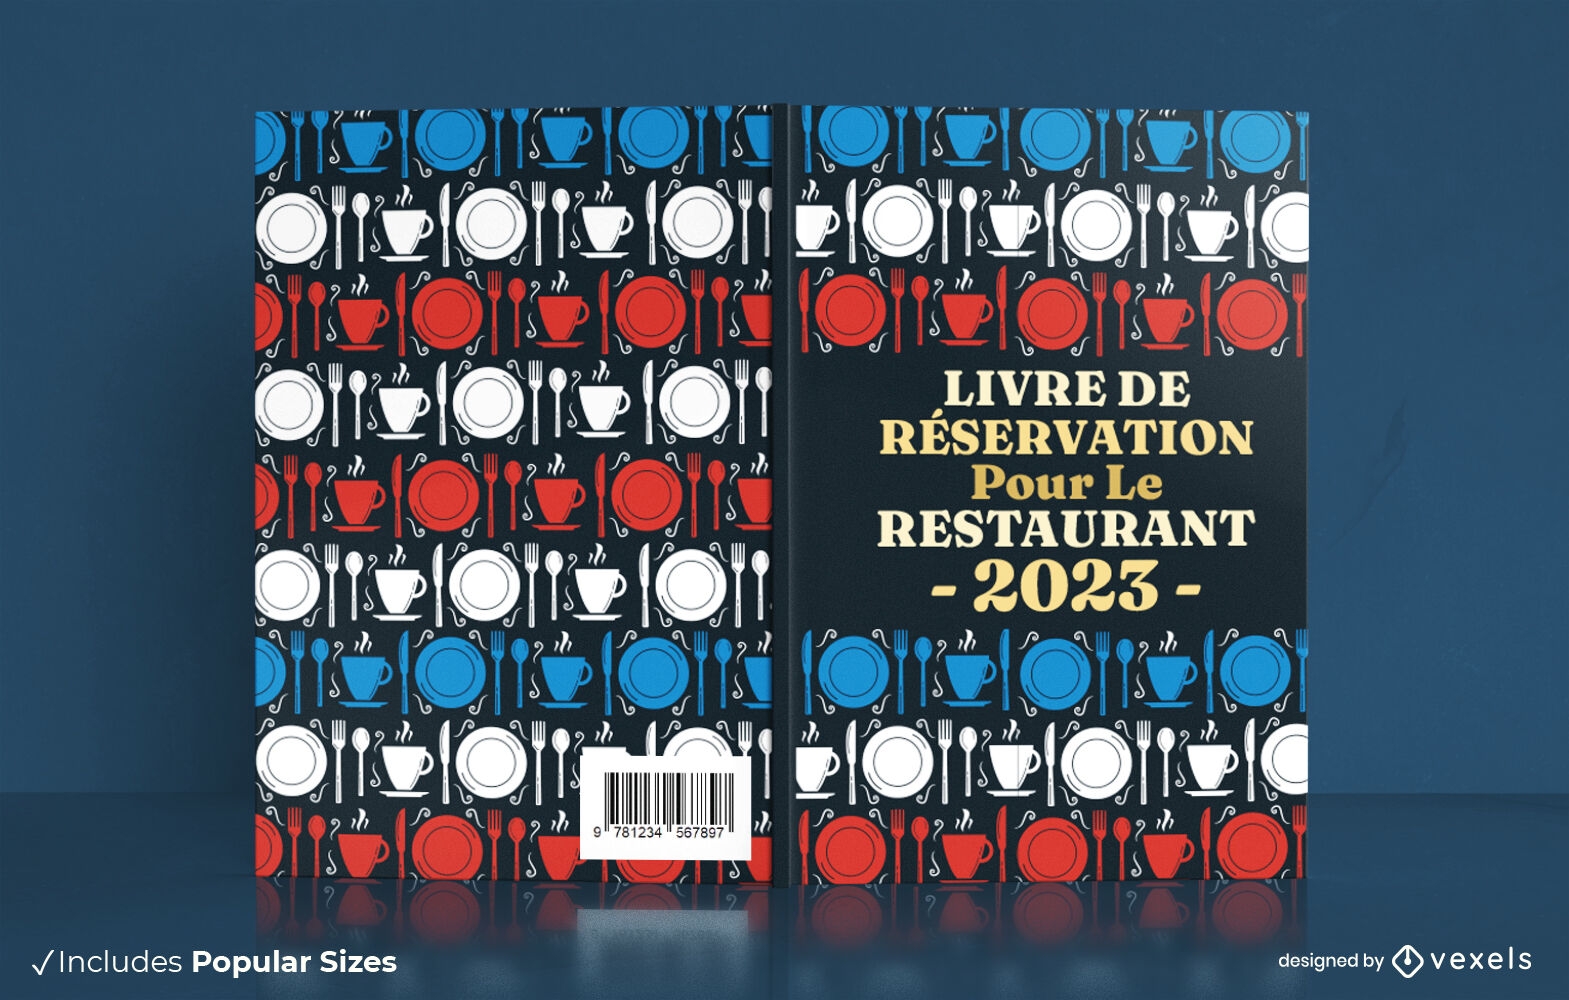 Restaurant reservations book cover design